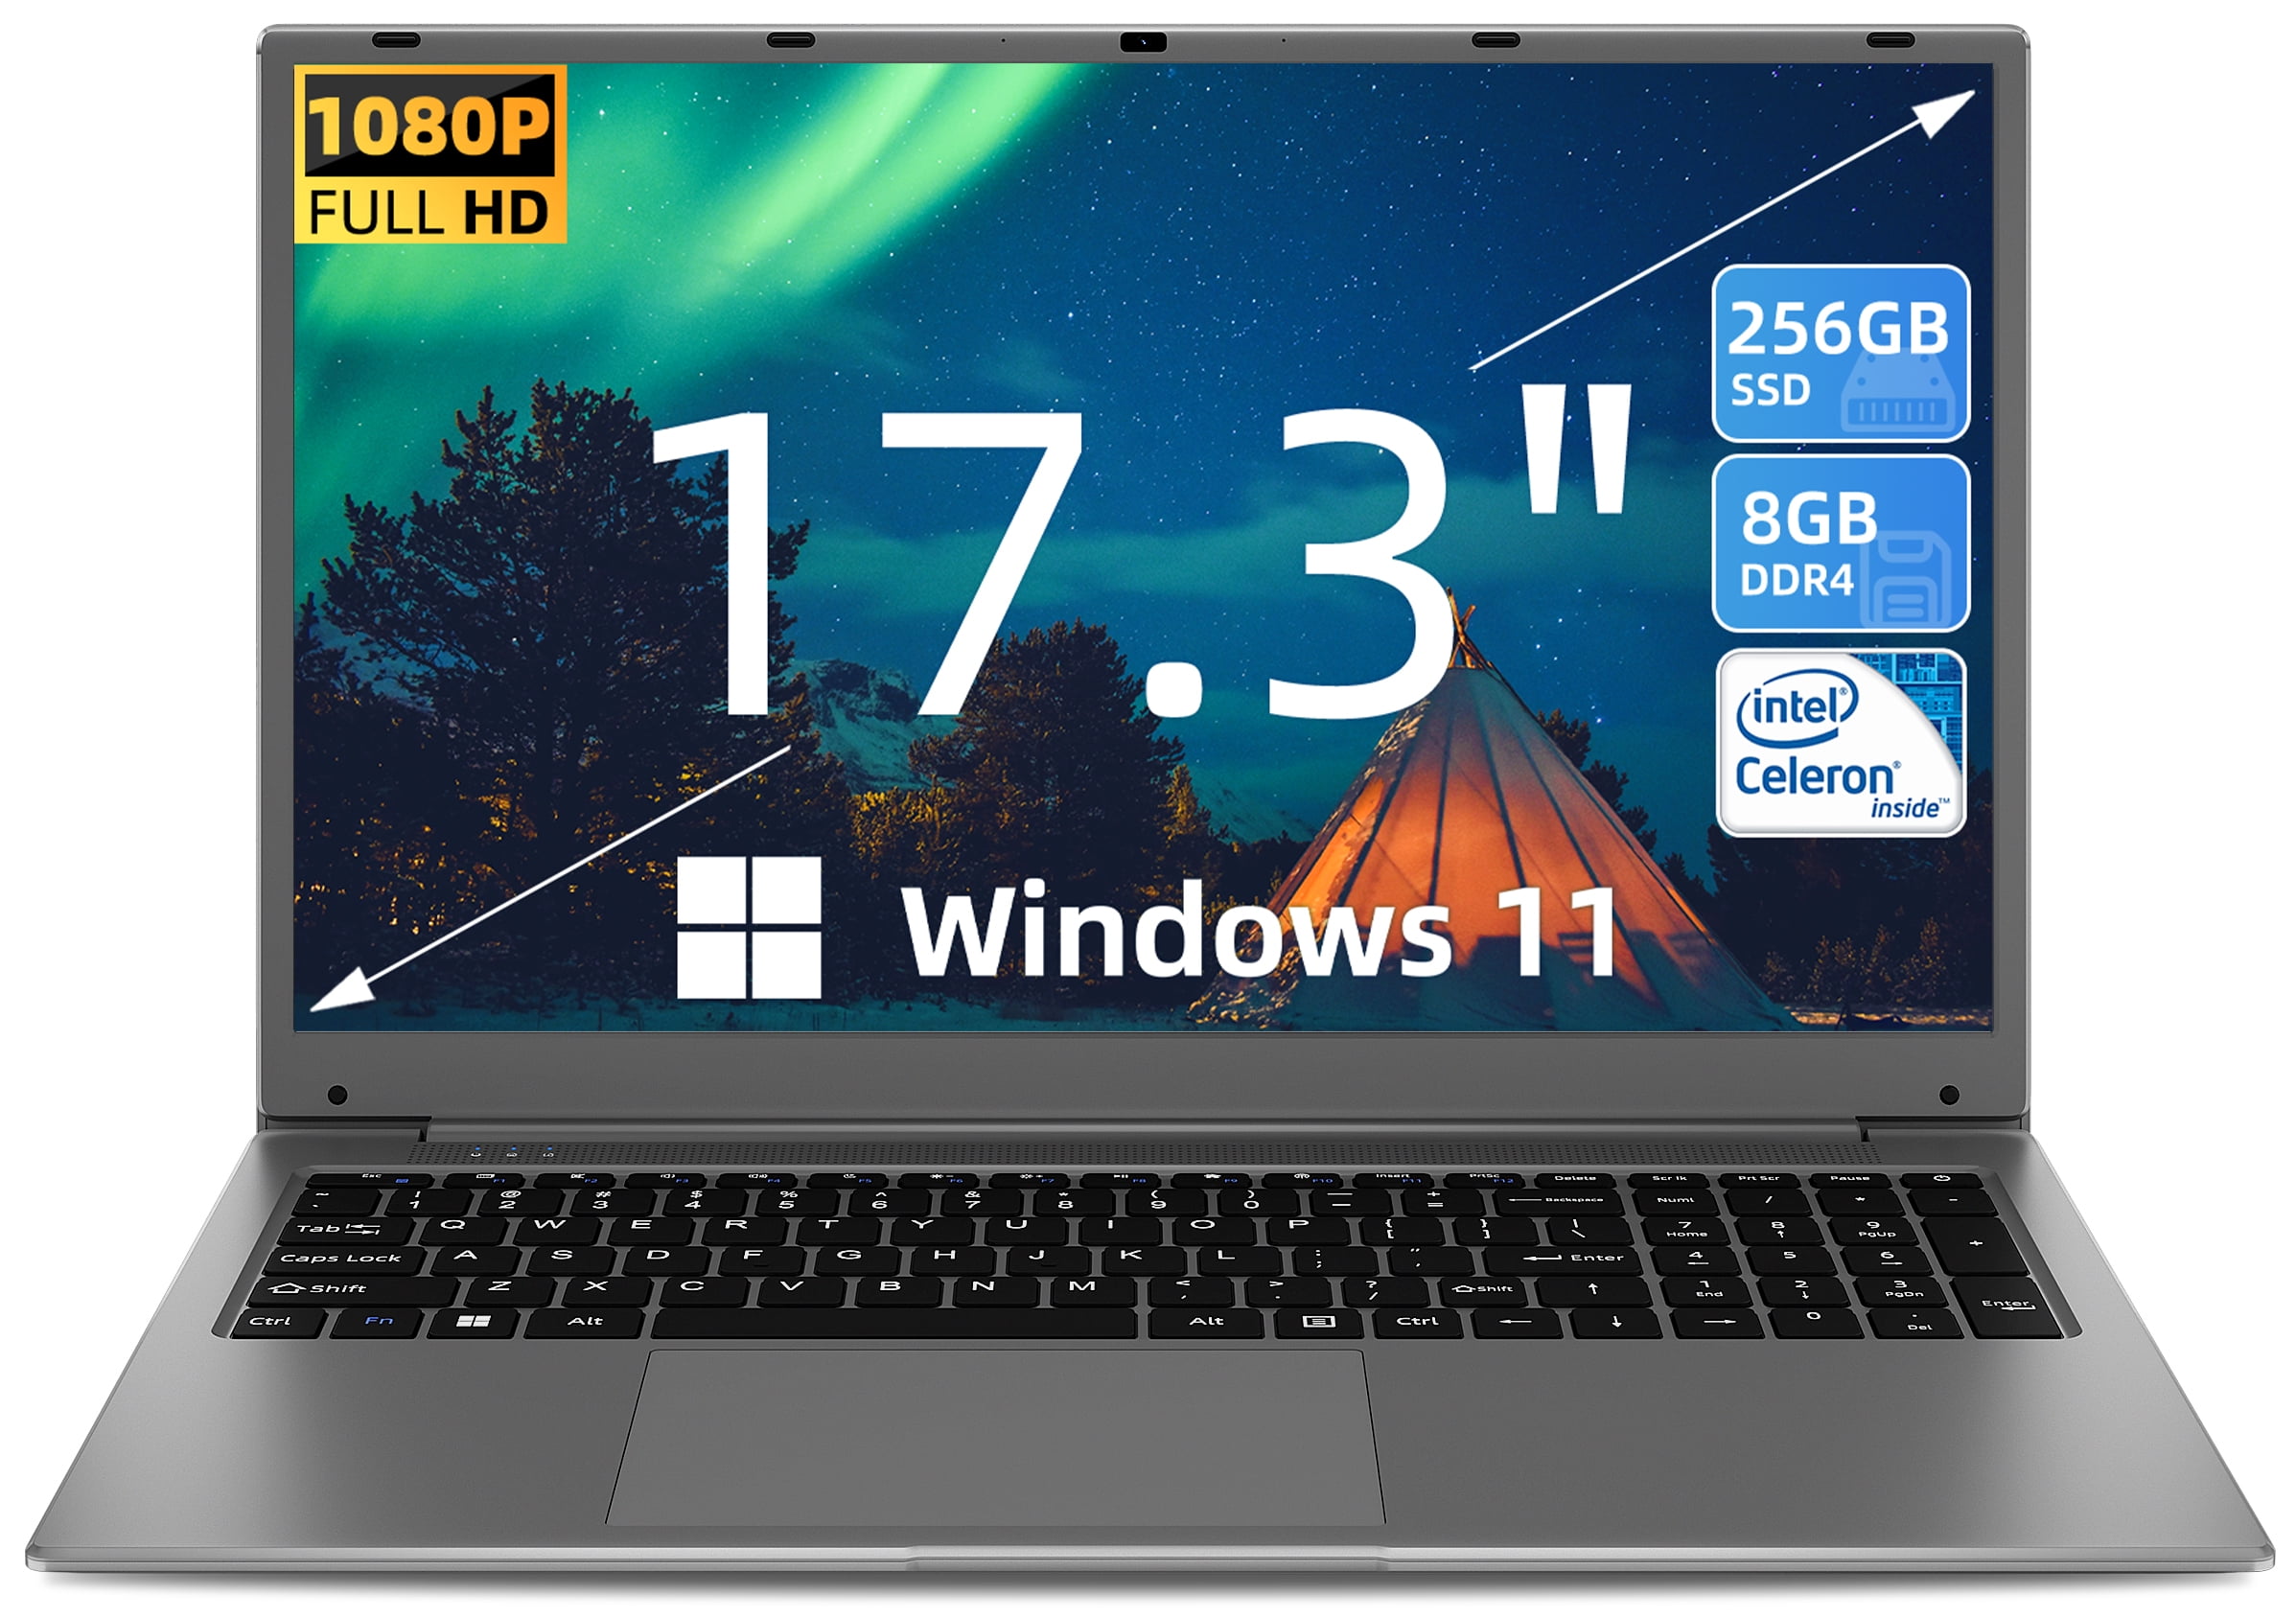  SGIN Laptop Computer, 15.6 inch, FHD 1920x1080 Display with  Intel Celeron N5095 Processor(Up to 2.9GHz), 12GB DDR4 512GB SSD, WiFi,  Bluetooth 4.2, USB 3.0 : Electronics